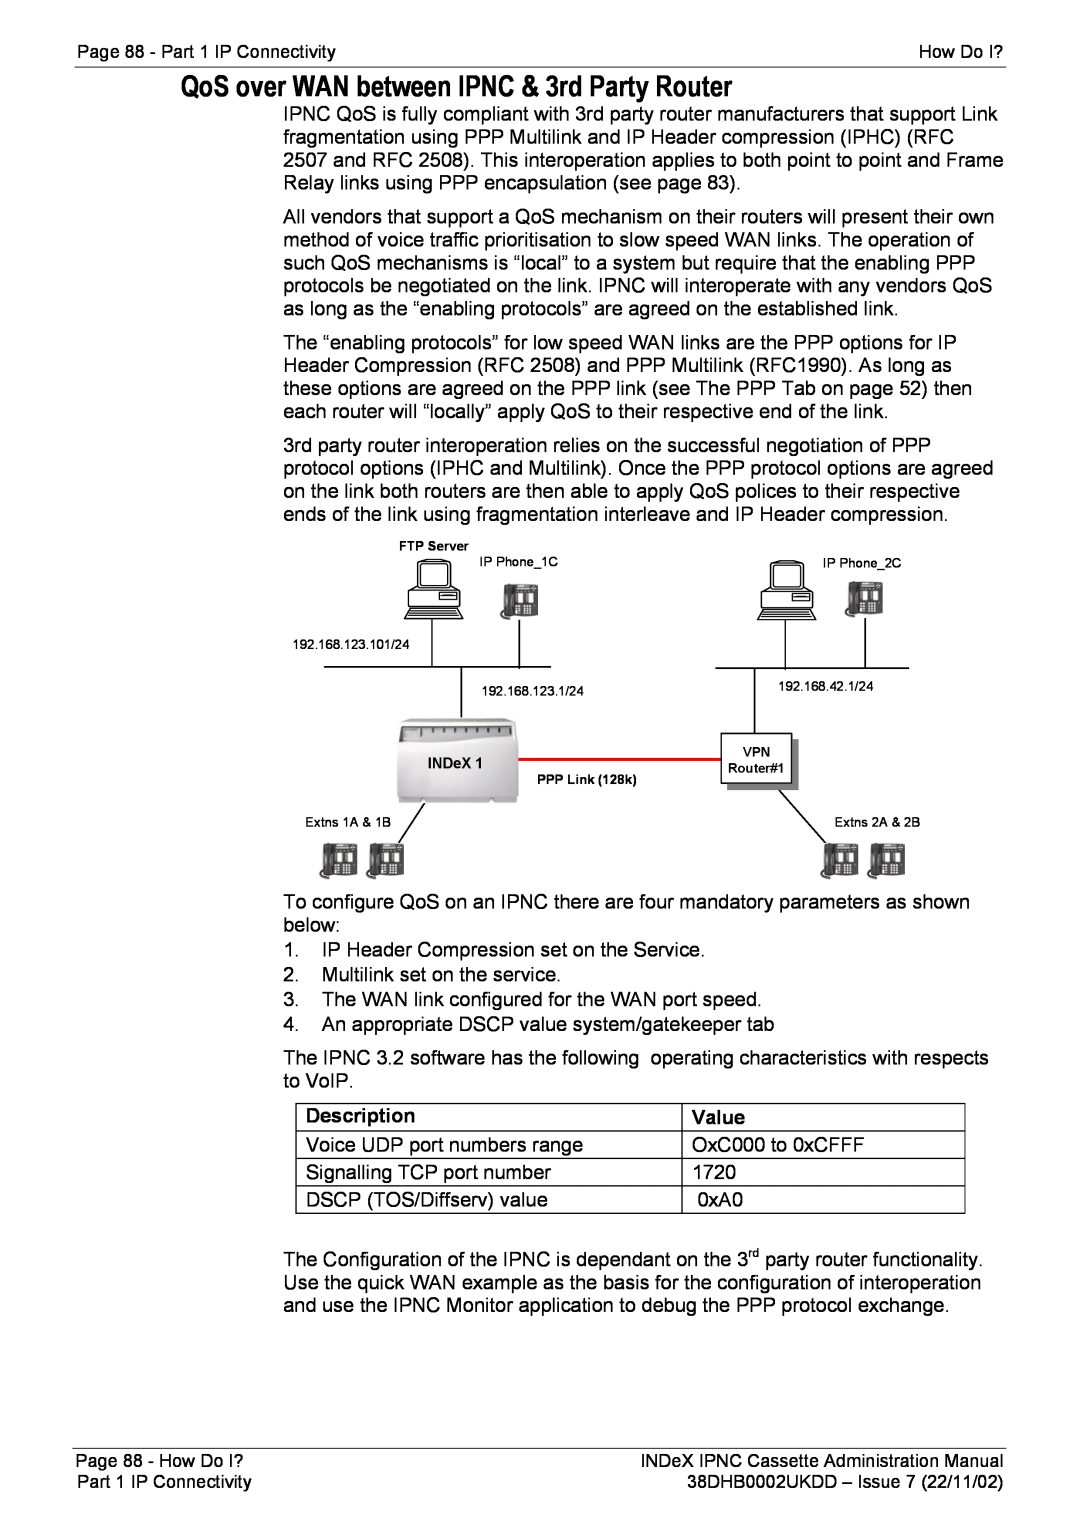 Avaya 38DHB0002UKDD manual QoS over WAN between IPNC & 3rd Party Router, Description, Value 